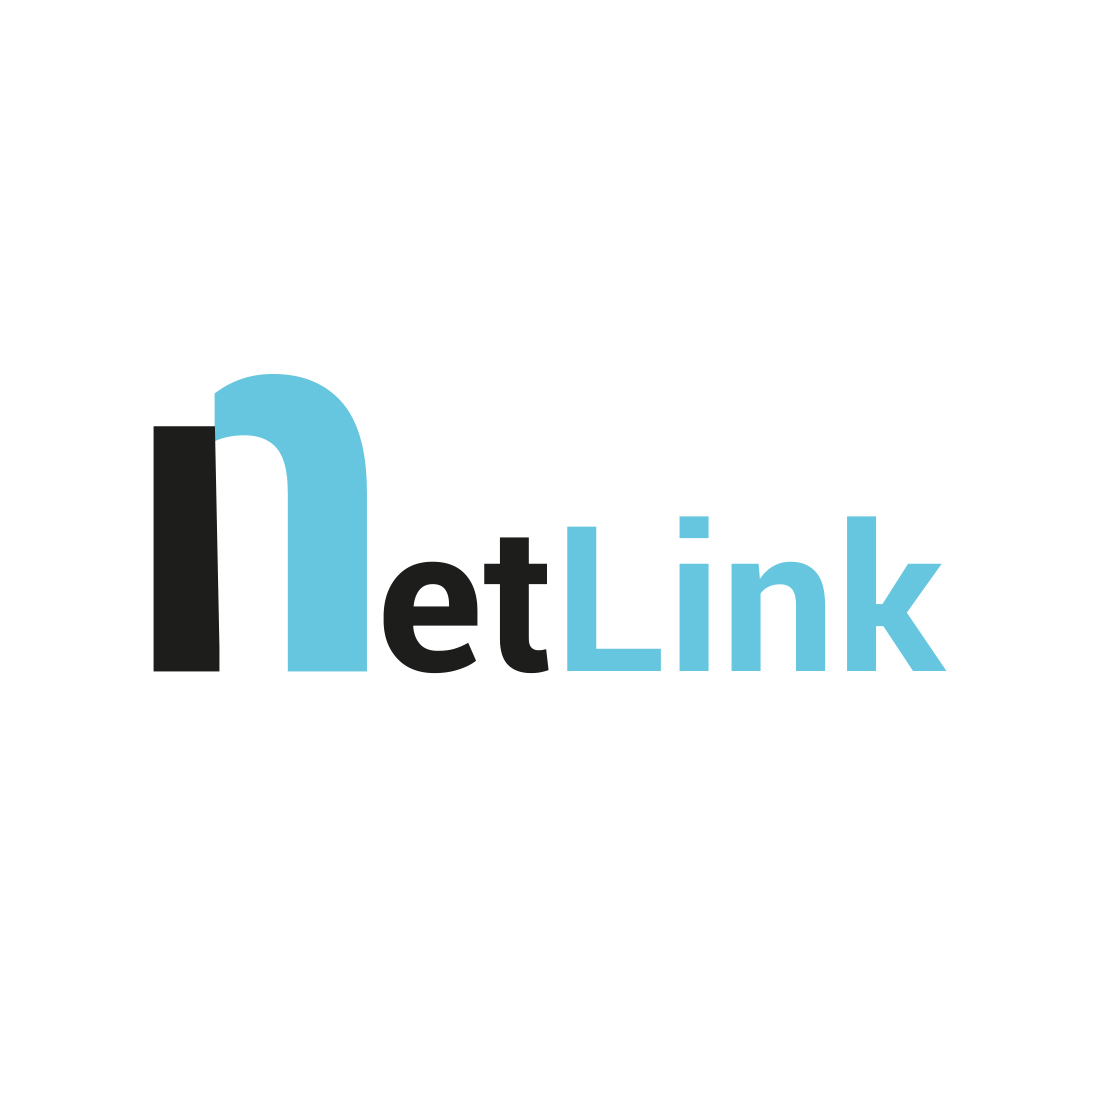 Letter N logo design ( txt is easily editable ) cover image.